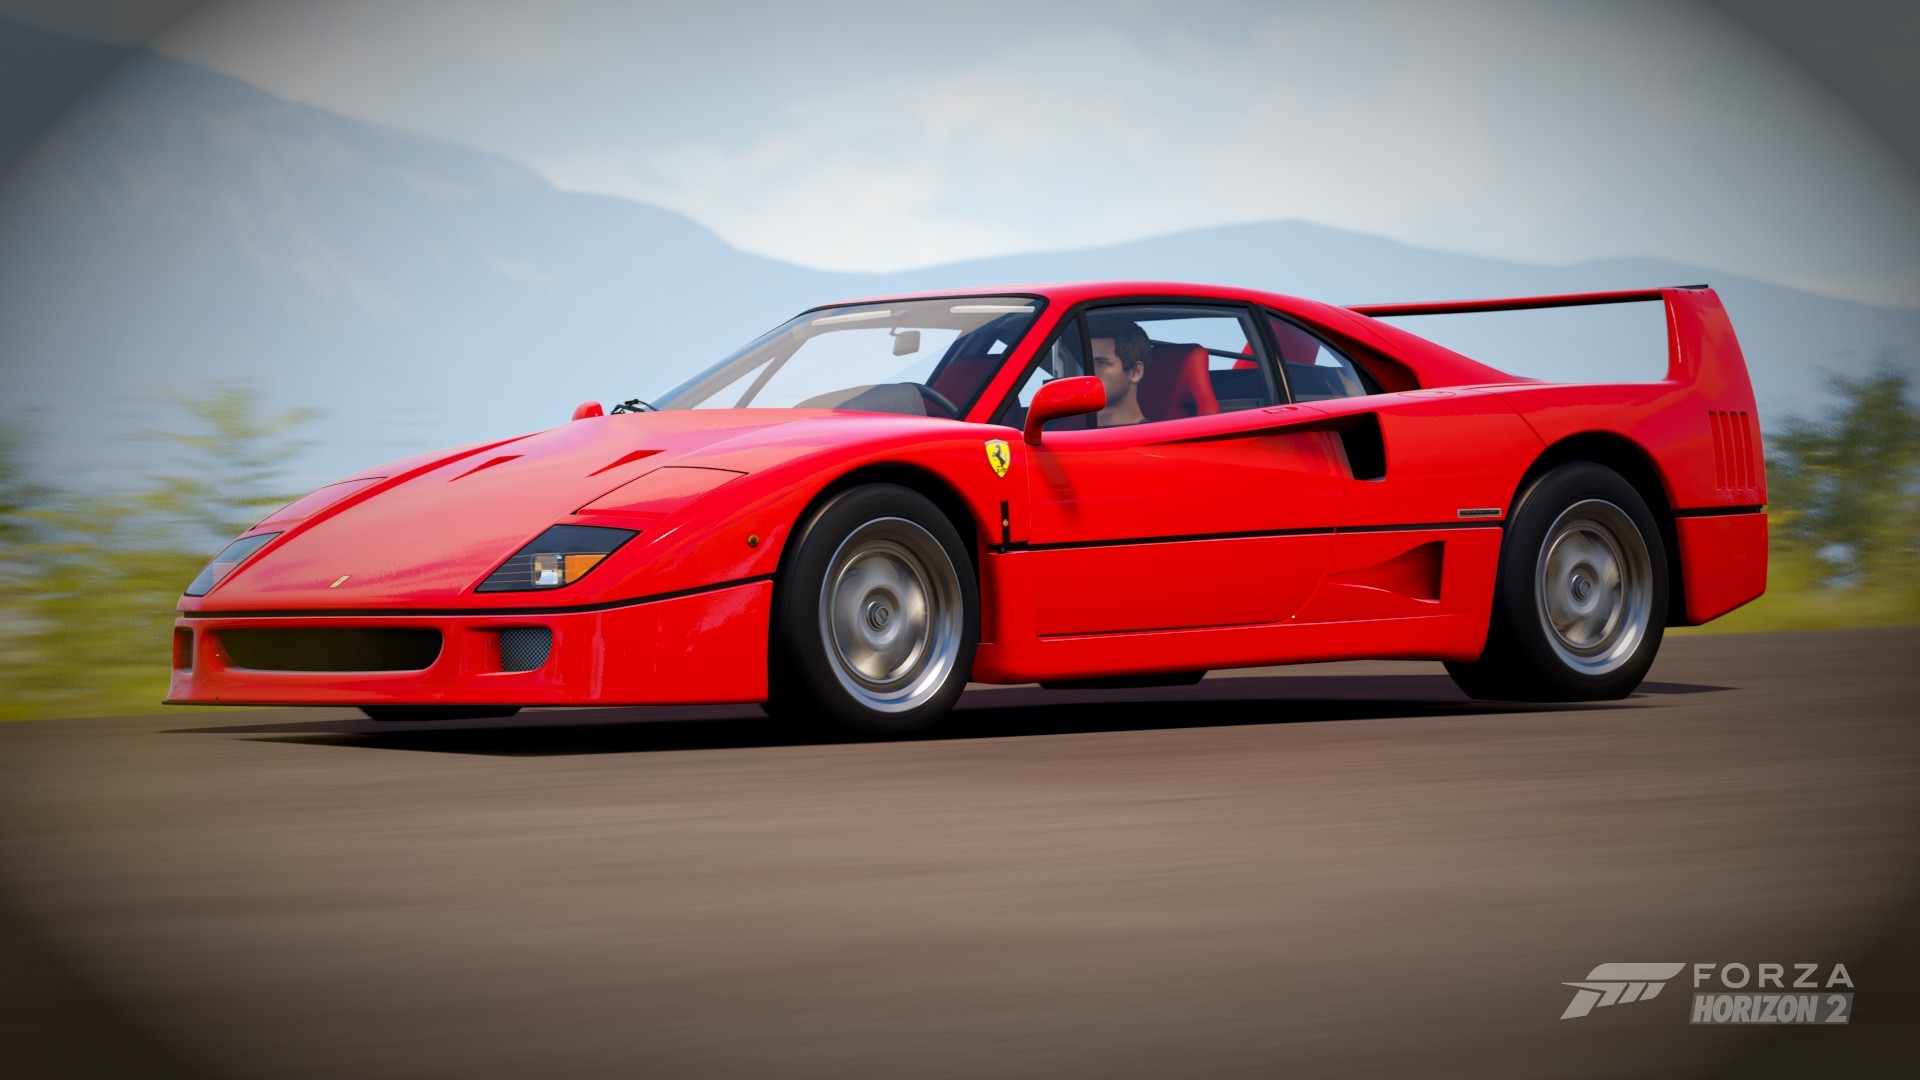 Ferrari, Car, Forza Horizon 2, Ferrari F40, F40, Red Cars Wallpaper